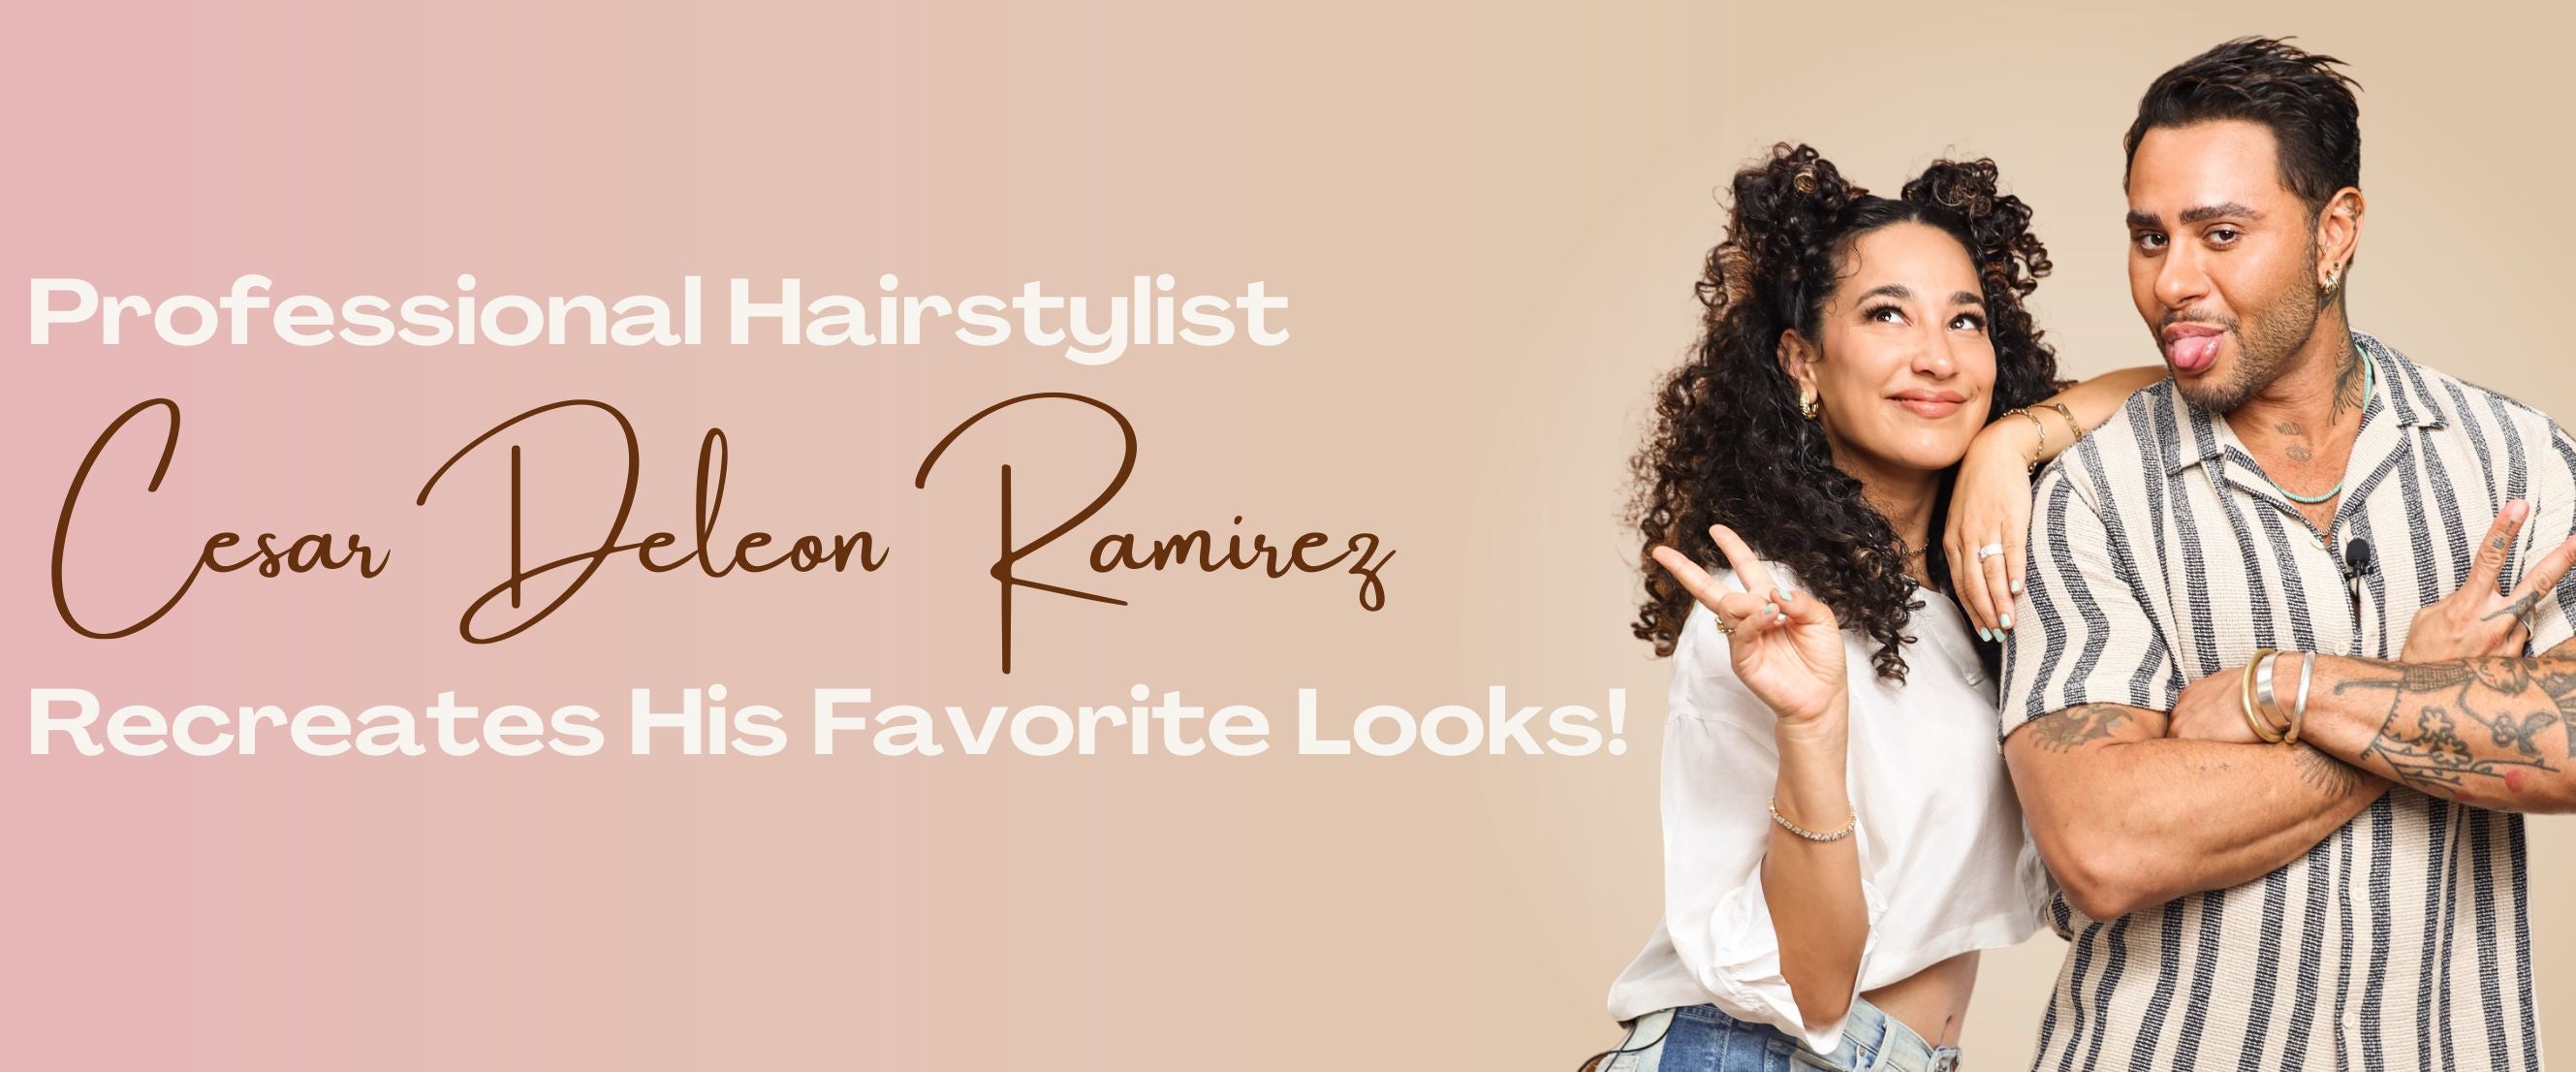 Professional Hairstylist Cesar Deleon Ramirez Recreates His Favorite Looks